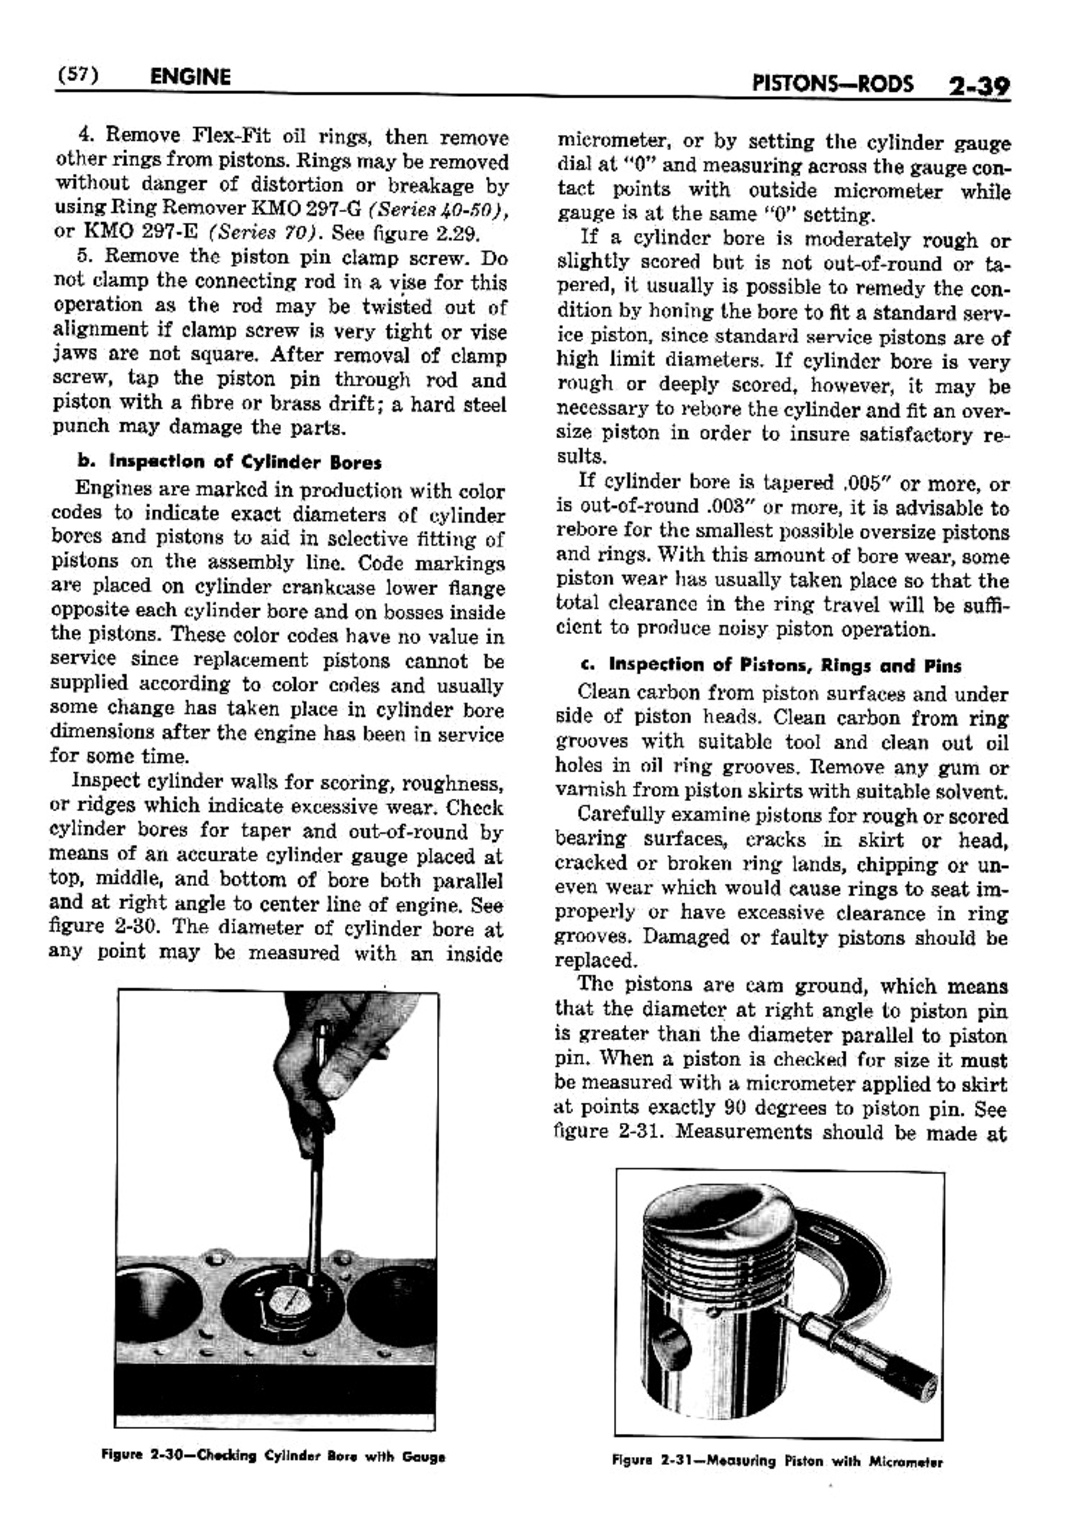 n_03 1952 Buick Shop Manual - Engine-039-039.jpg